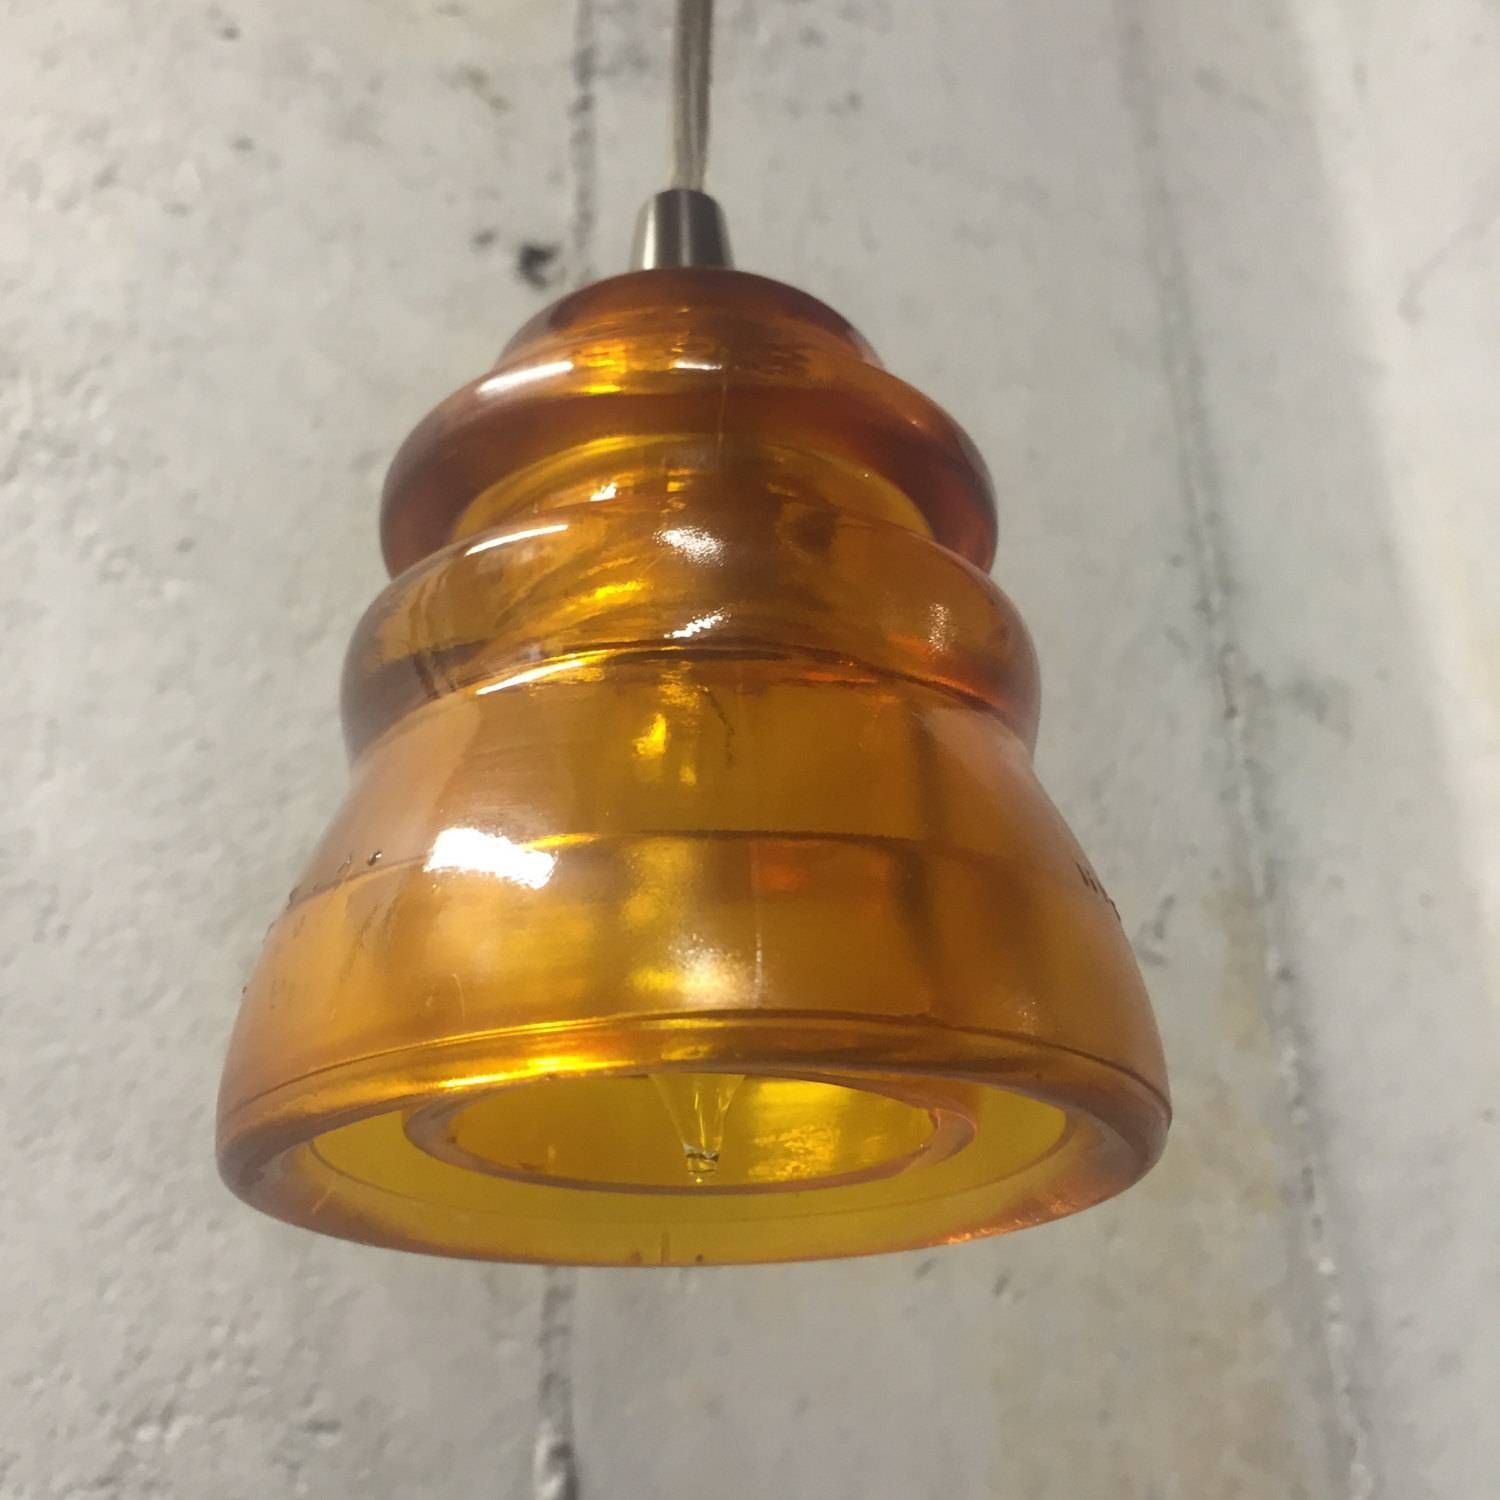 Insulator Lighting Chandelier Vintage 1920's 60's Repurposed Pertaining To Insulator Pendant Lights (Photo 7 of 15)